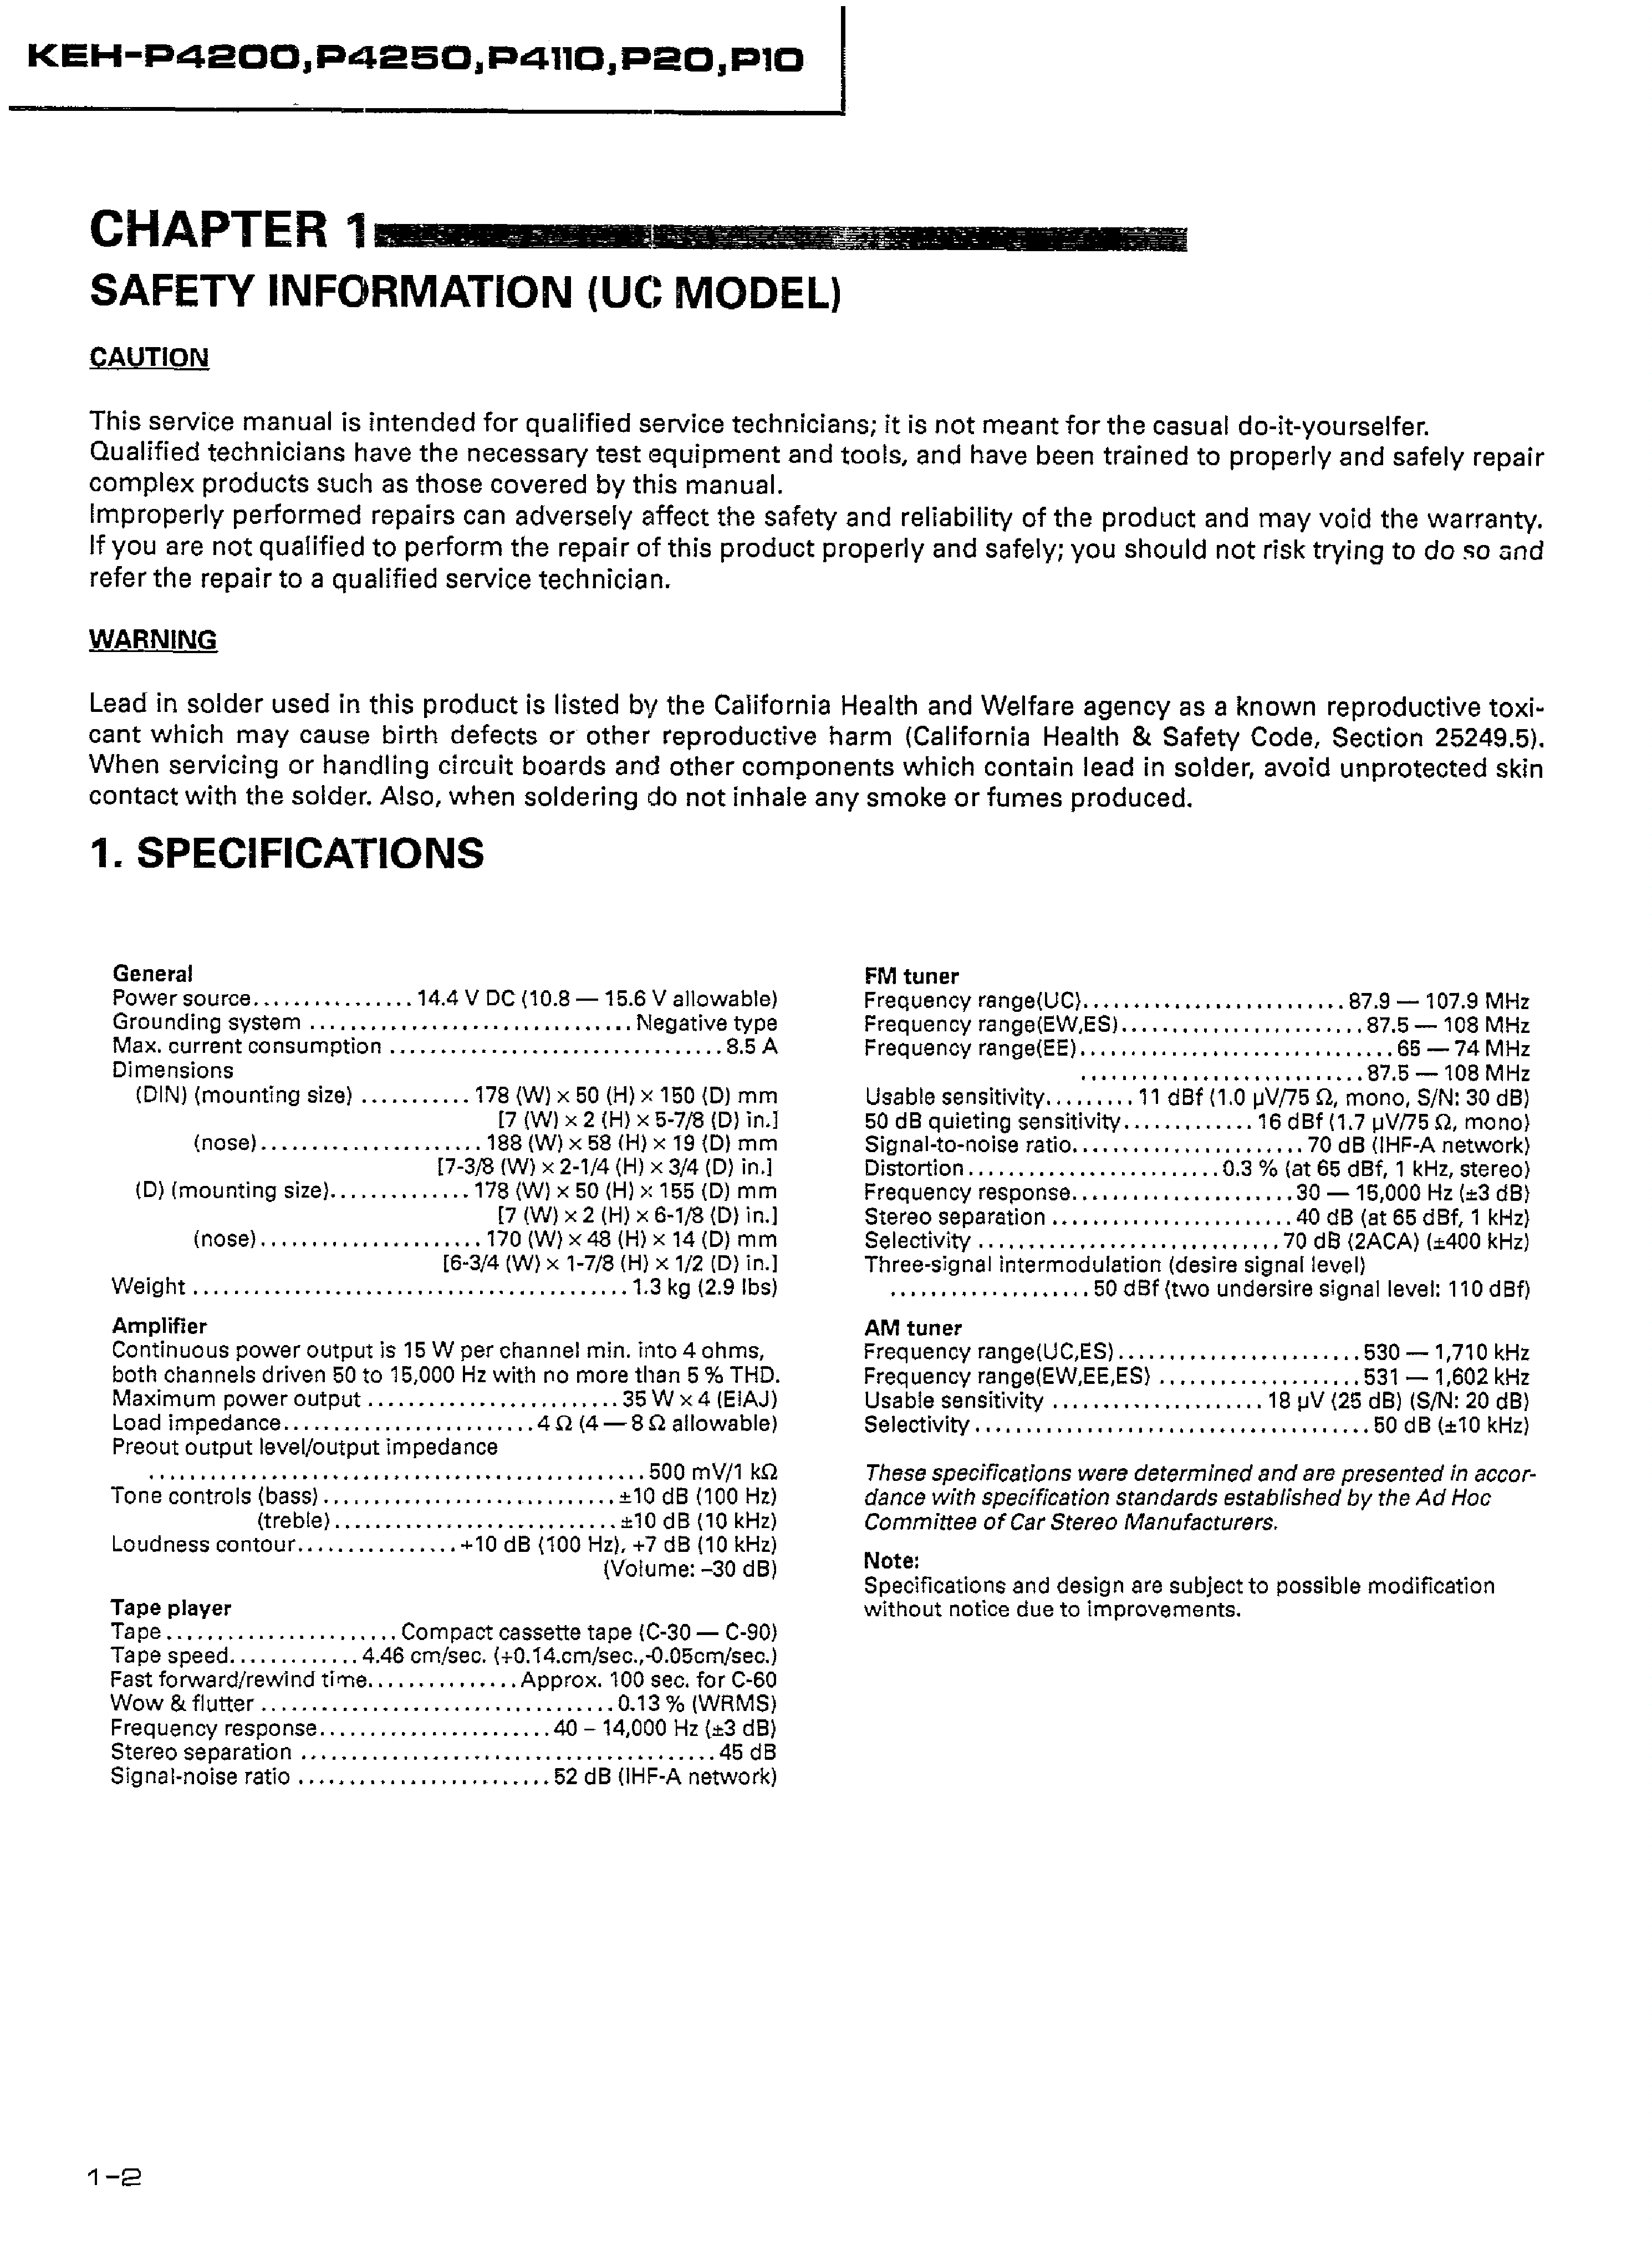 PIONEER KEH-P4200 service manual (2nd page)